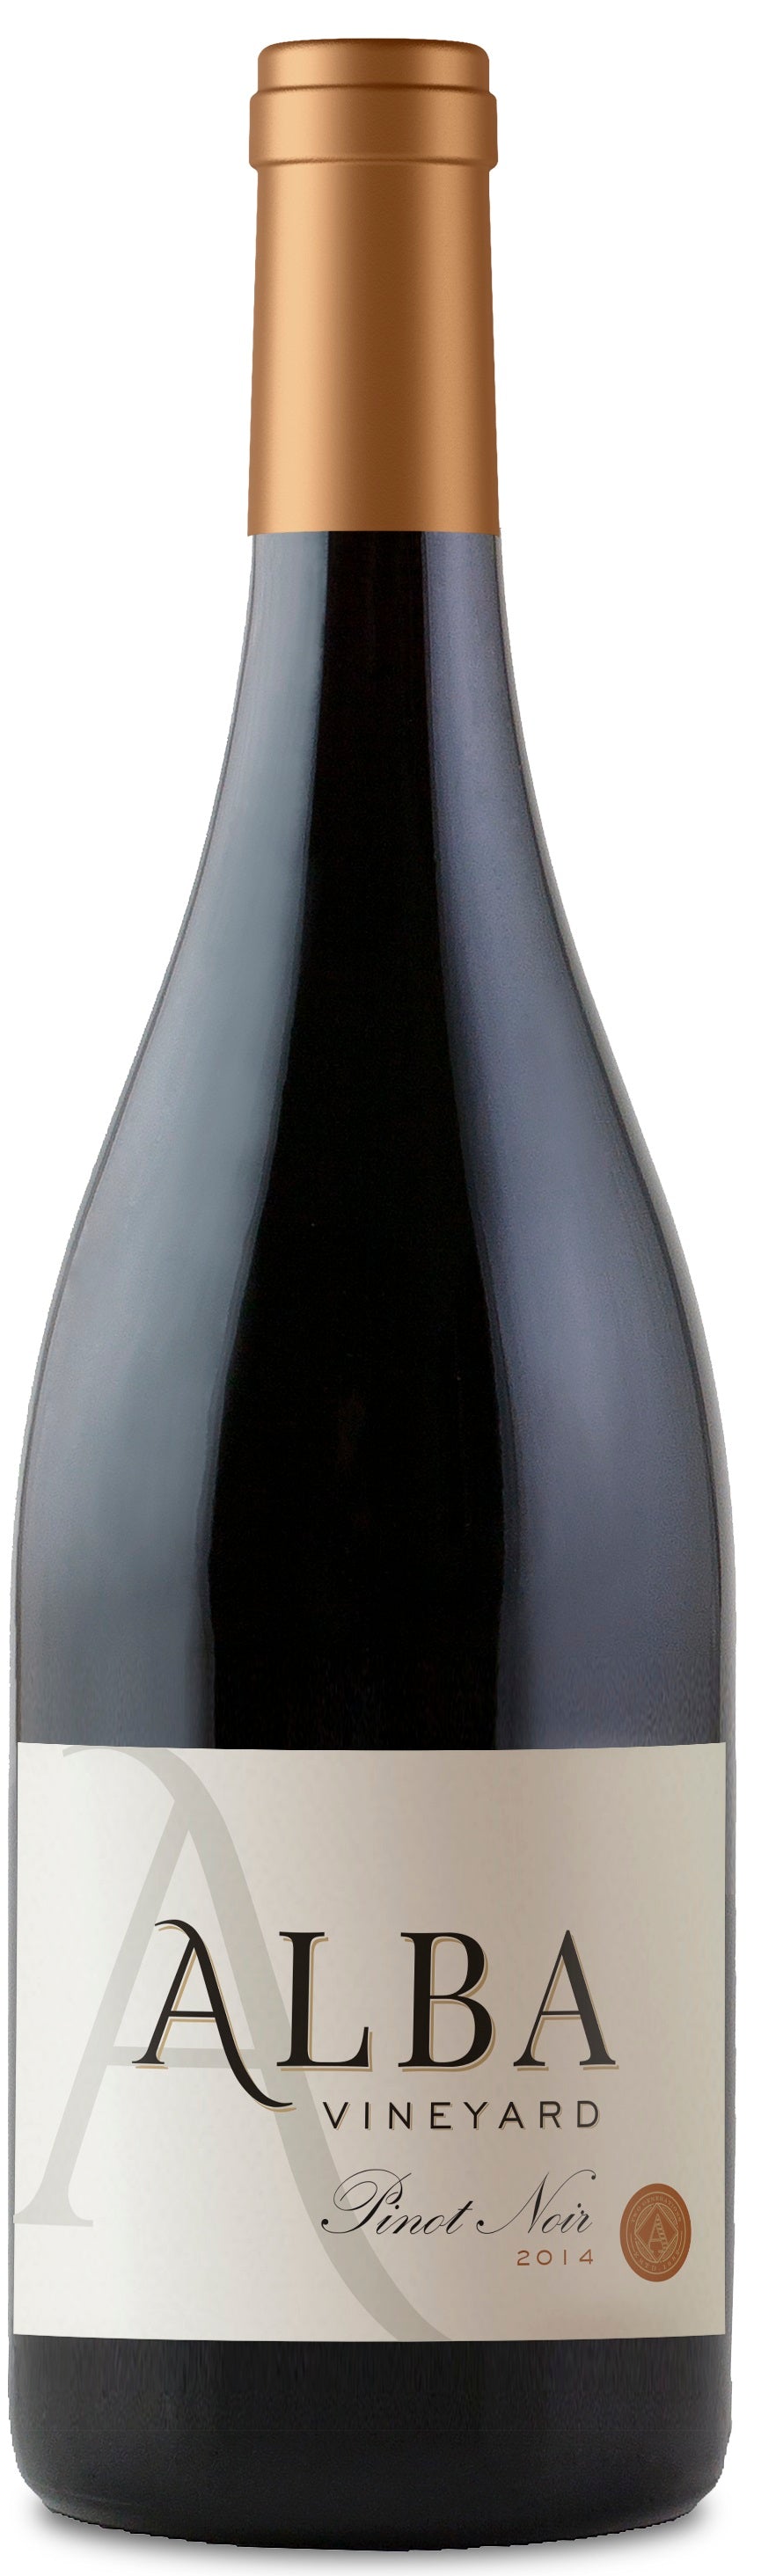 Alba Vineyard Pinot Noir 2014